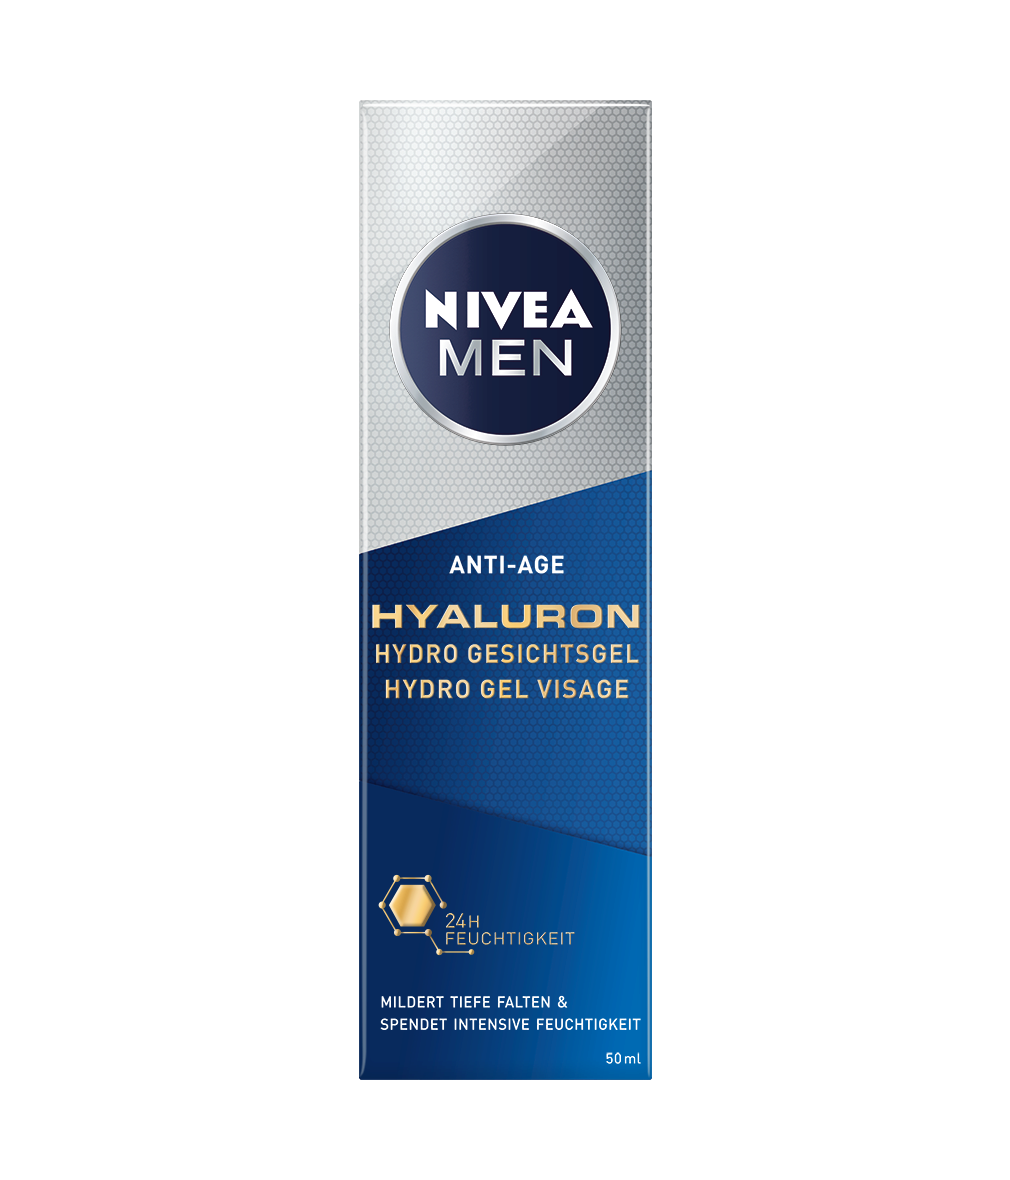 NIVEA MEN Anti-Age Hyaluron Hydro Gesichtsgel_50ml